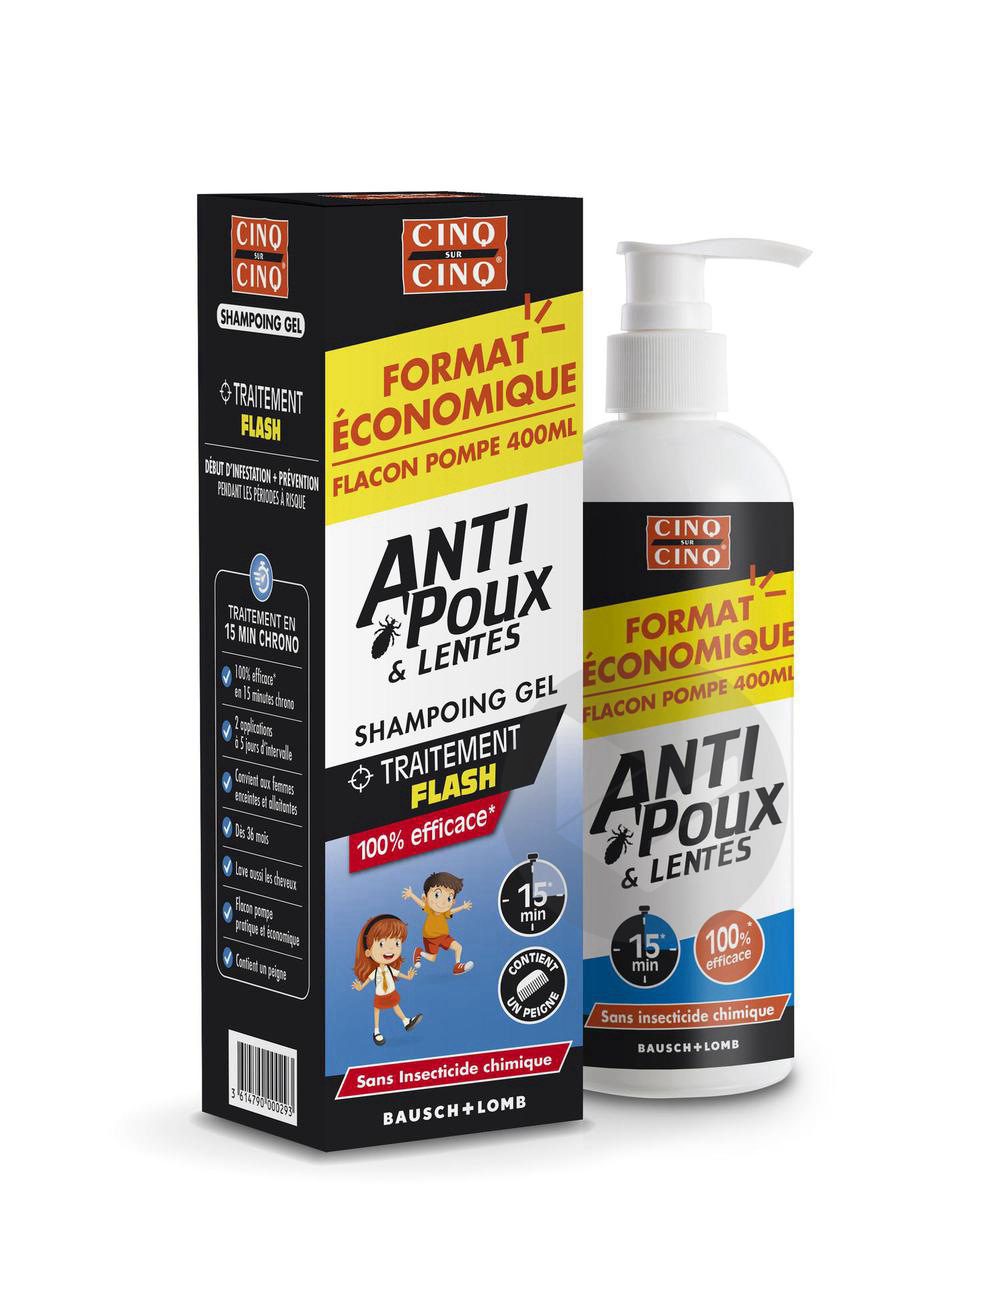 Ascaflash spray anti-acariens Zambon : anti acarien efficace